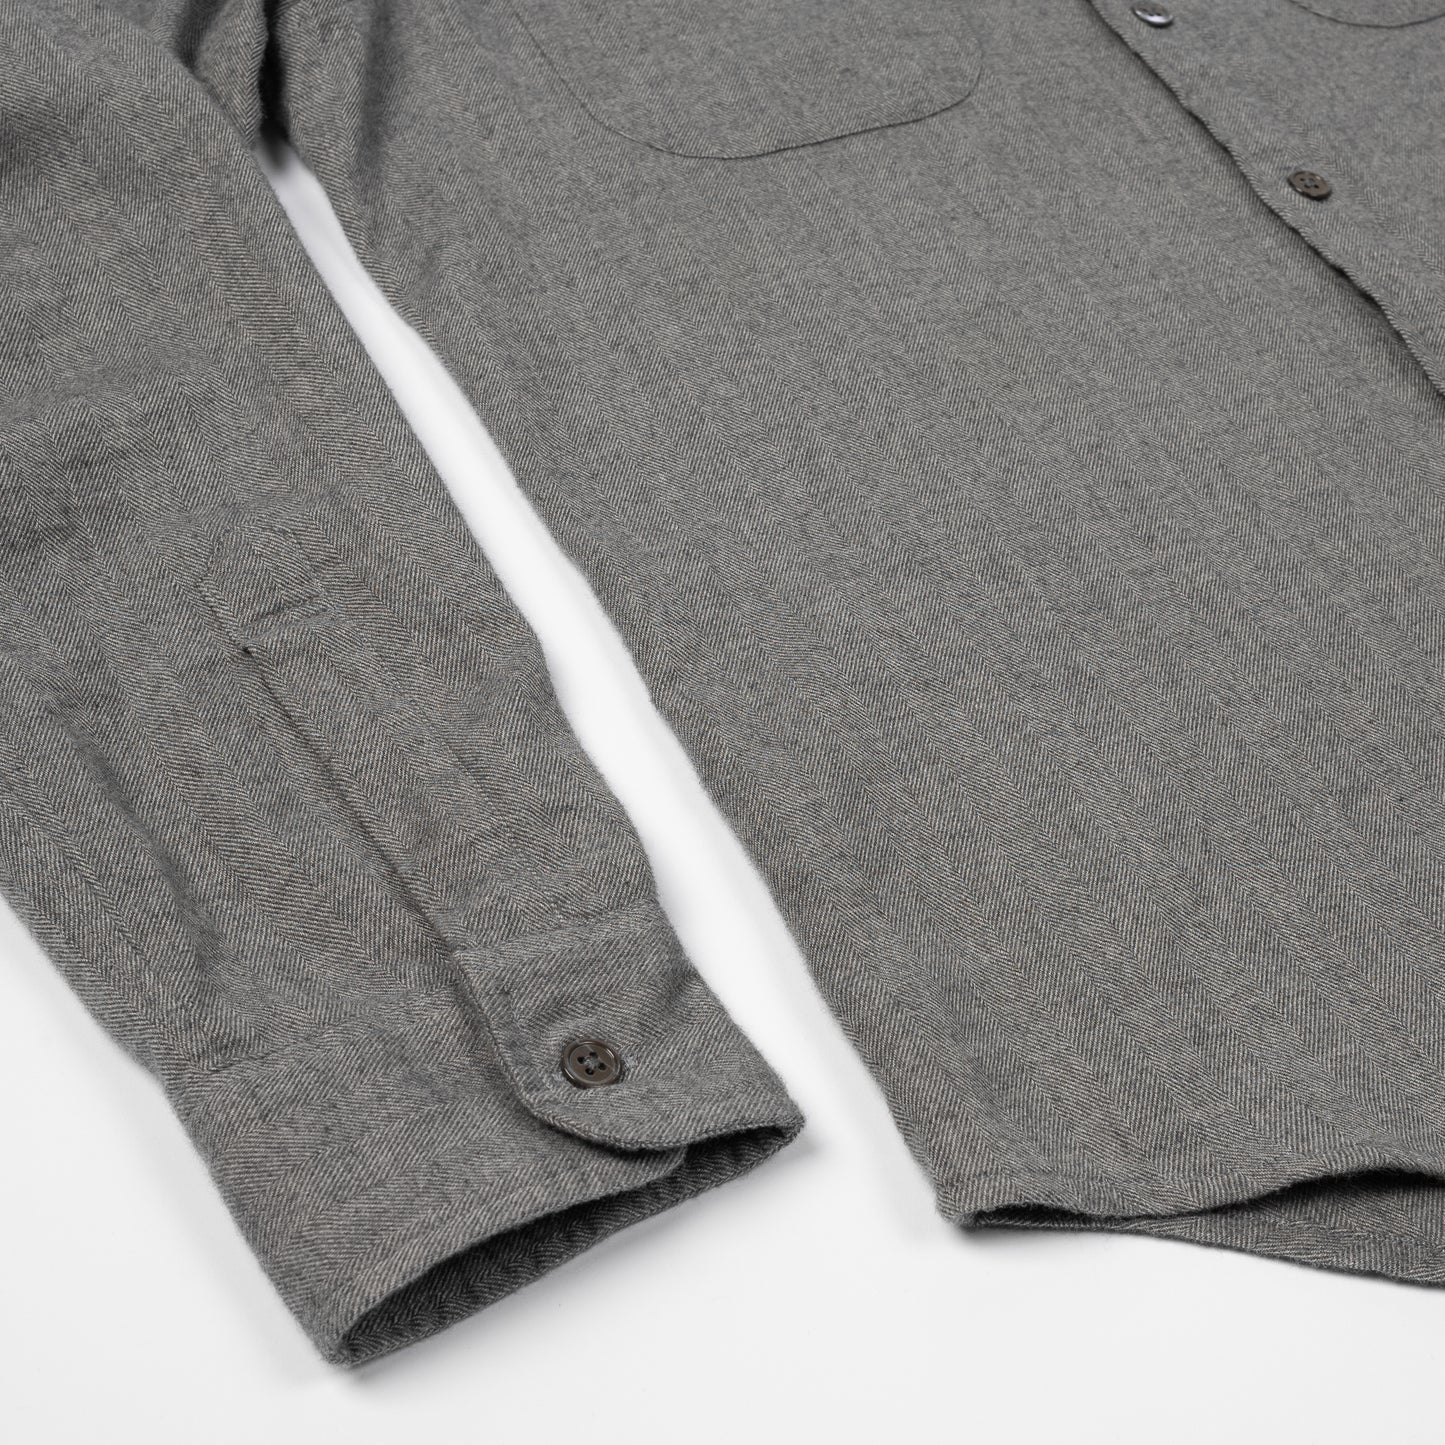 Miles Brushed Flannel Camp Shirt in Grey Herringbone- SLIM FIT